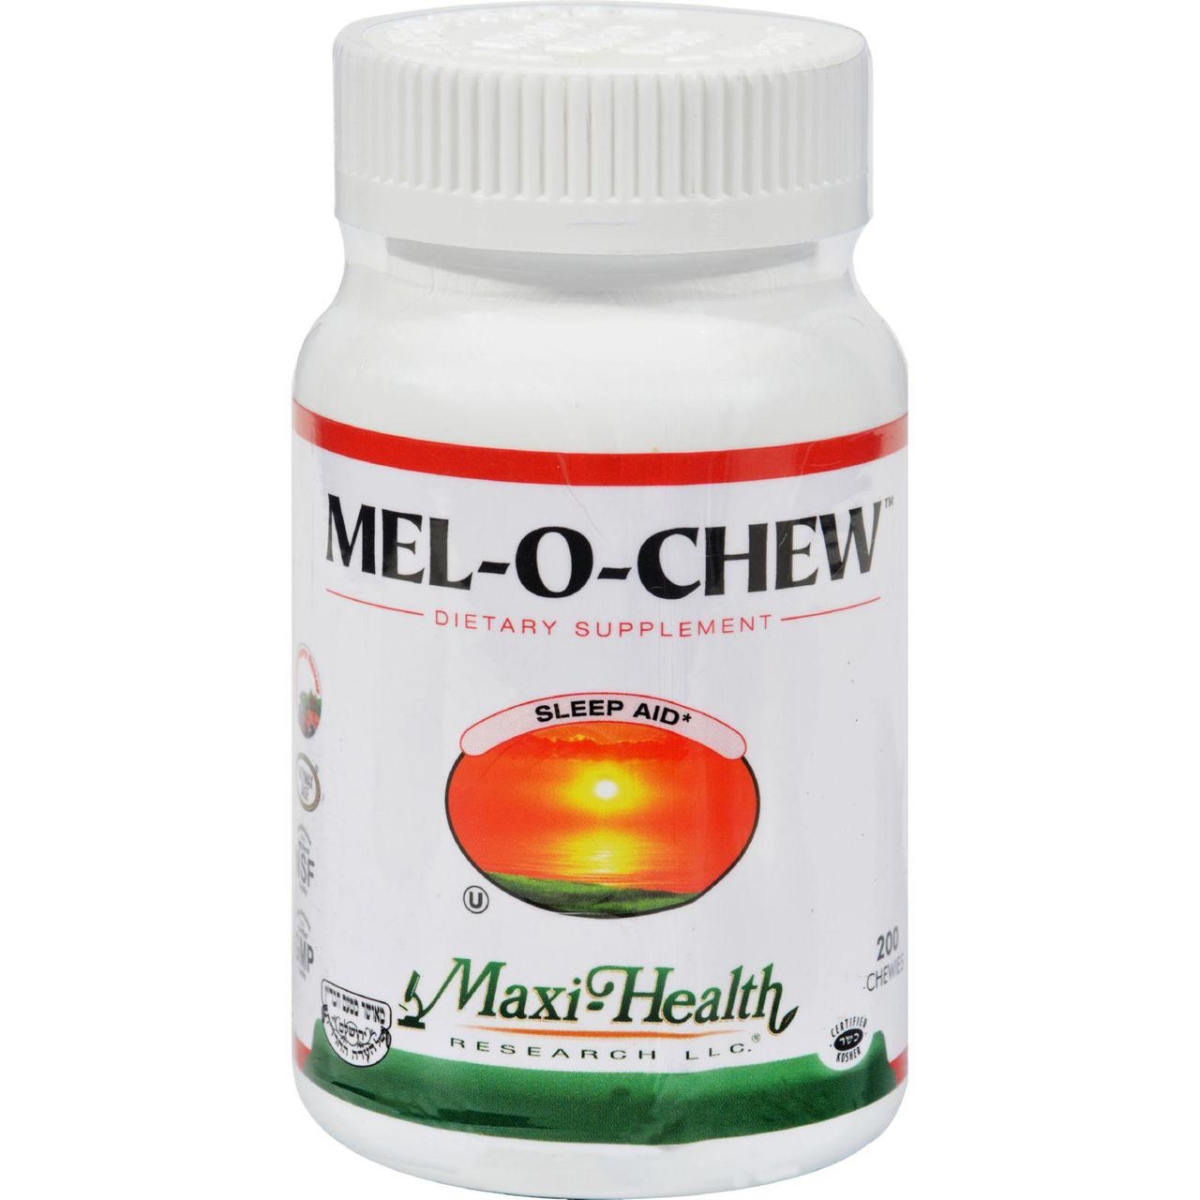 Hg1089887 Maxi Health Mel-o-chew - 200 Tablets